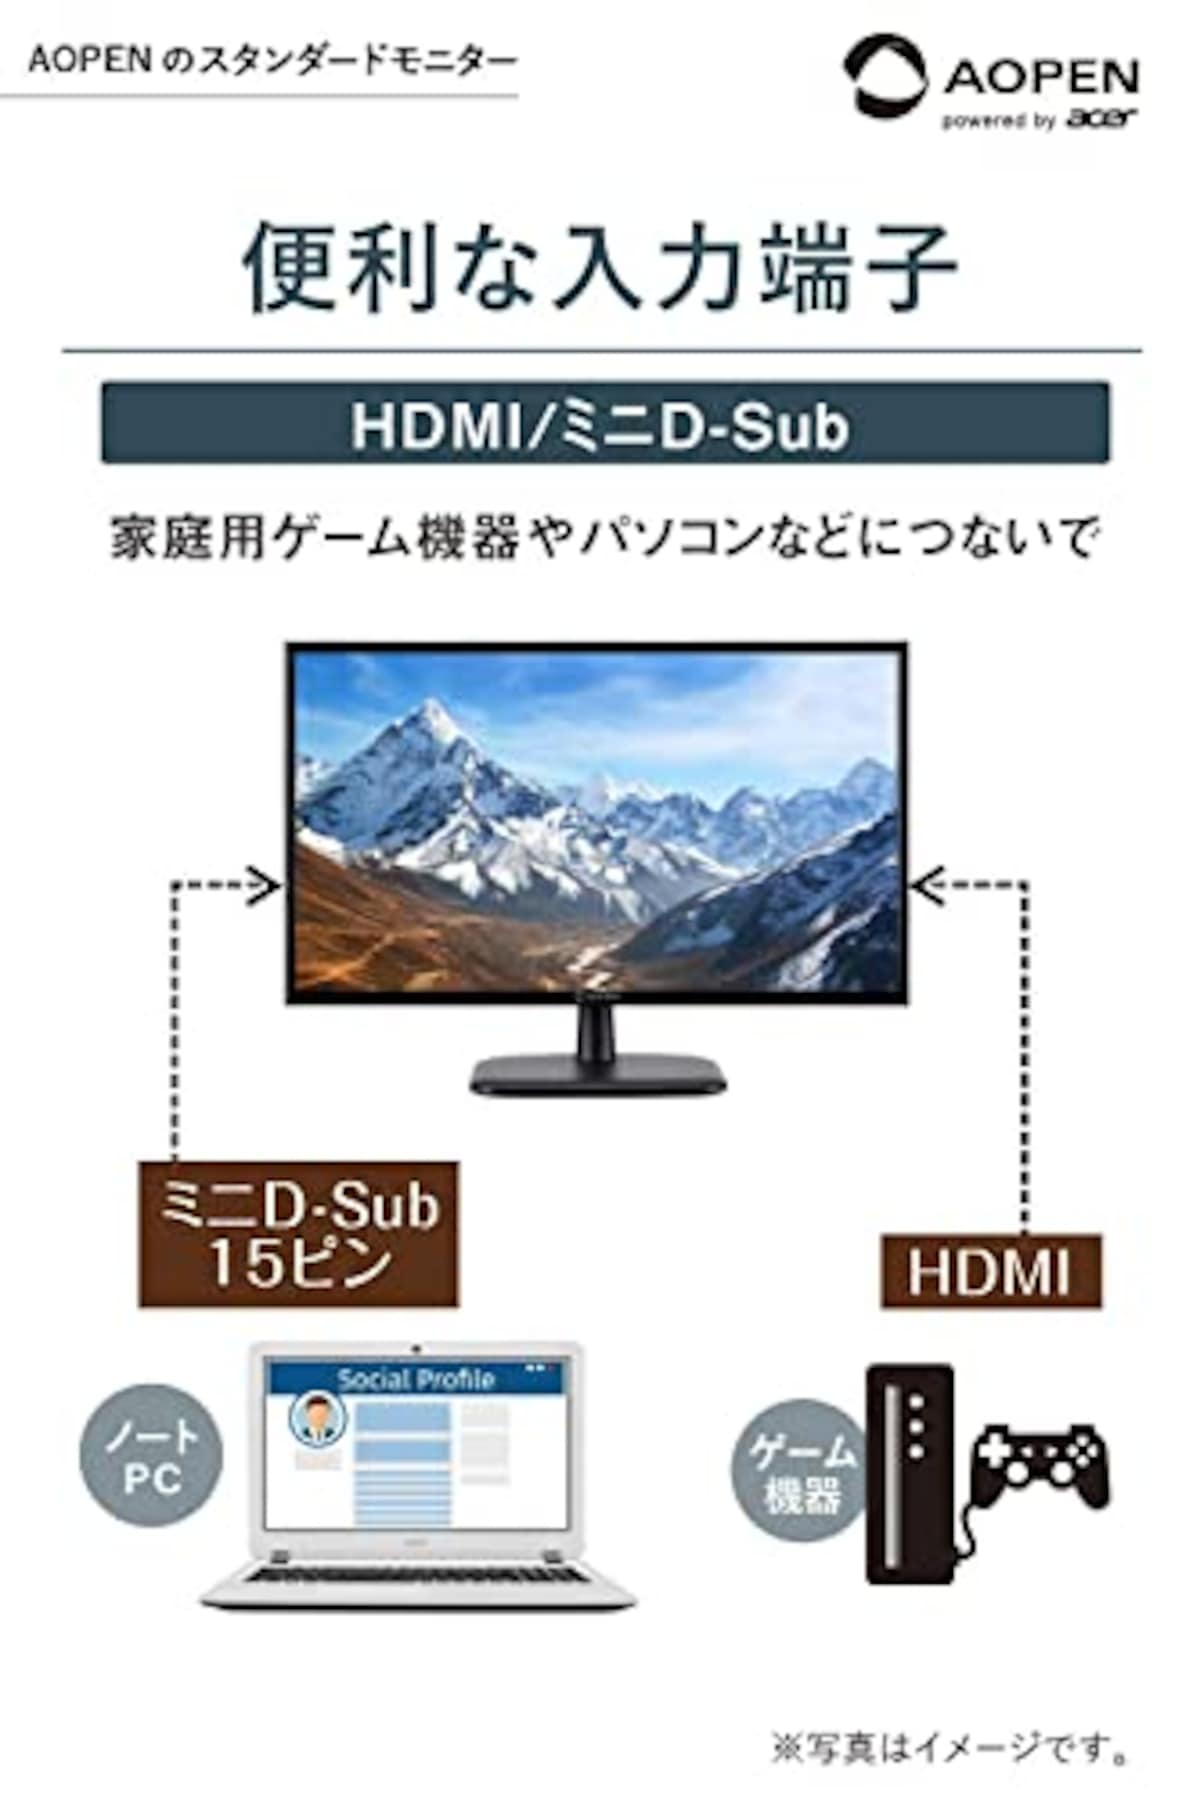  AOPEN モニター 22CV1Qbi 21.5インチ 75Hz 5ms VA フルHD HDMI スピーカー無し VESA ディスプレイ 3年保証 広い視野角178°画像5 